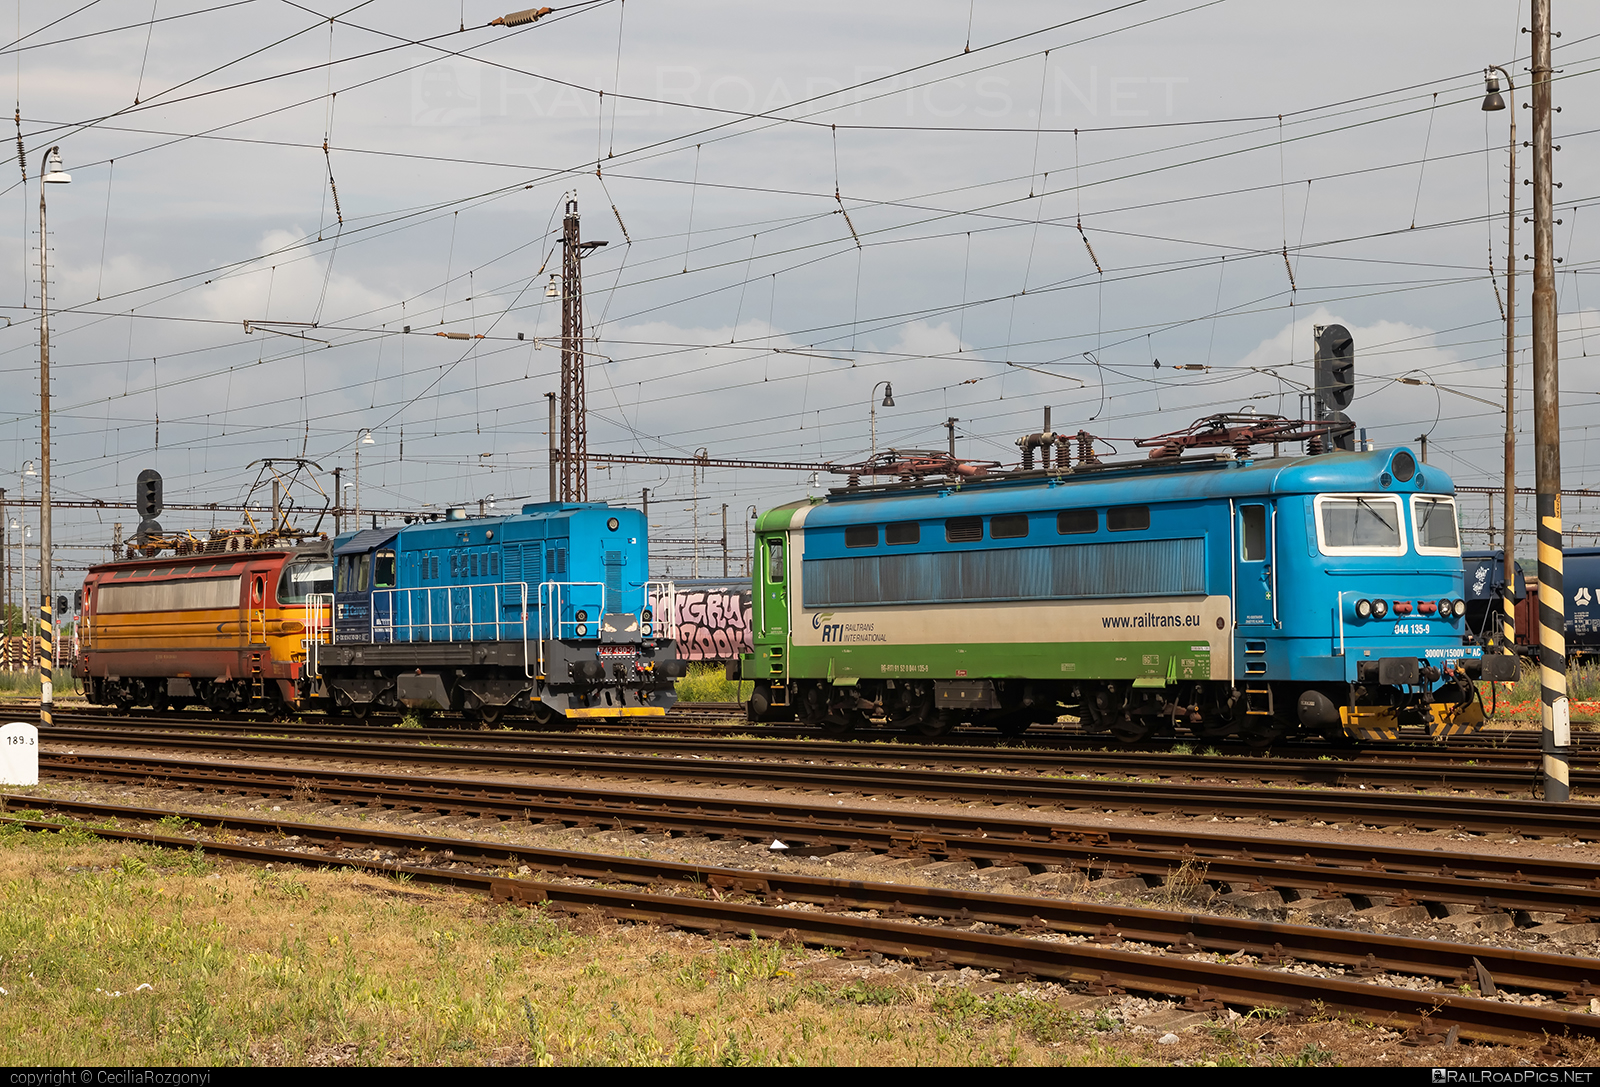 Škoda 73E - 044 135-9 operated by Railtrans International, s.r.o #RailtransInternational #locomotive242 #plechac #rti #skoda #skoda73e